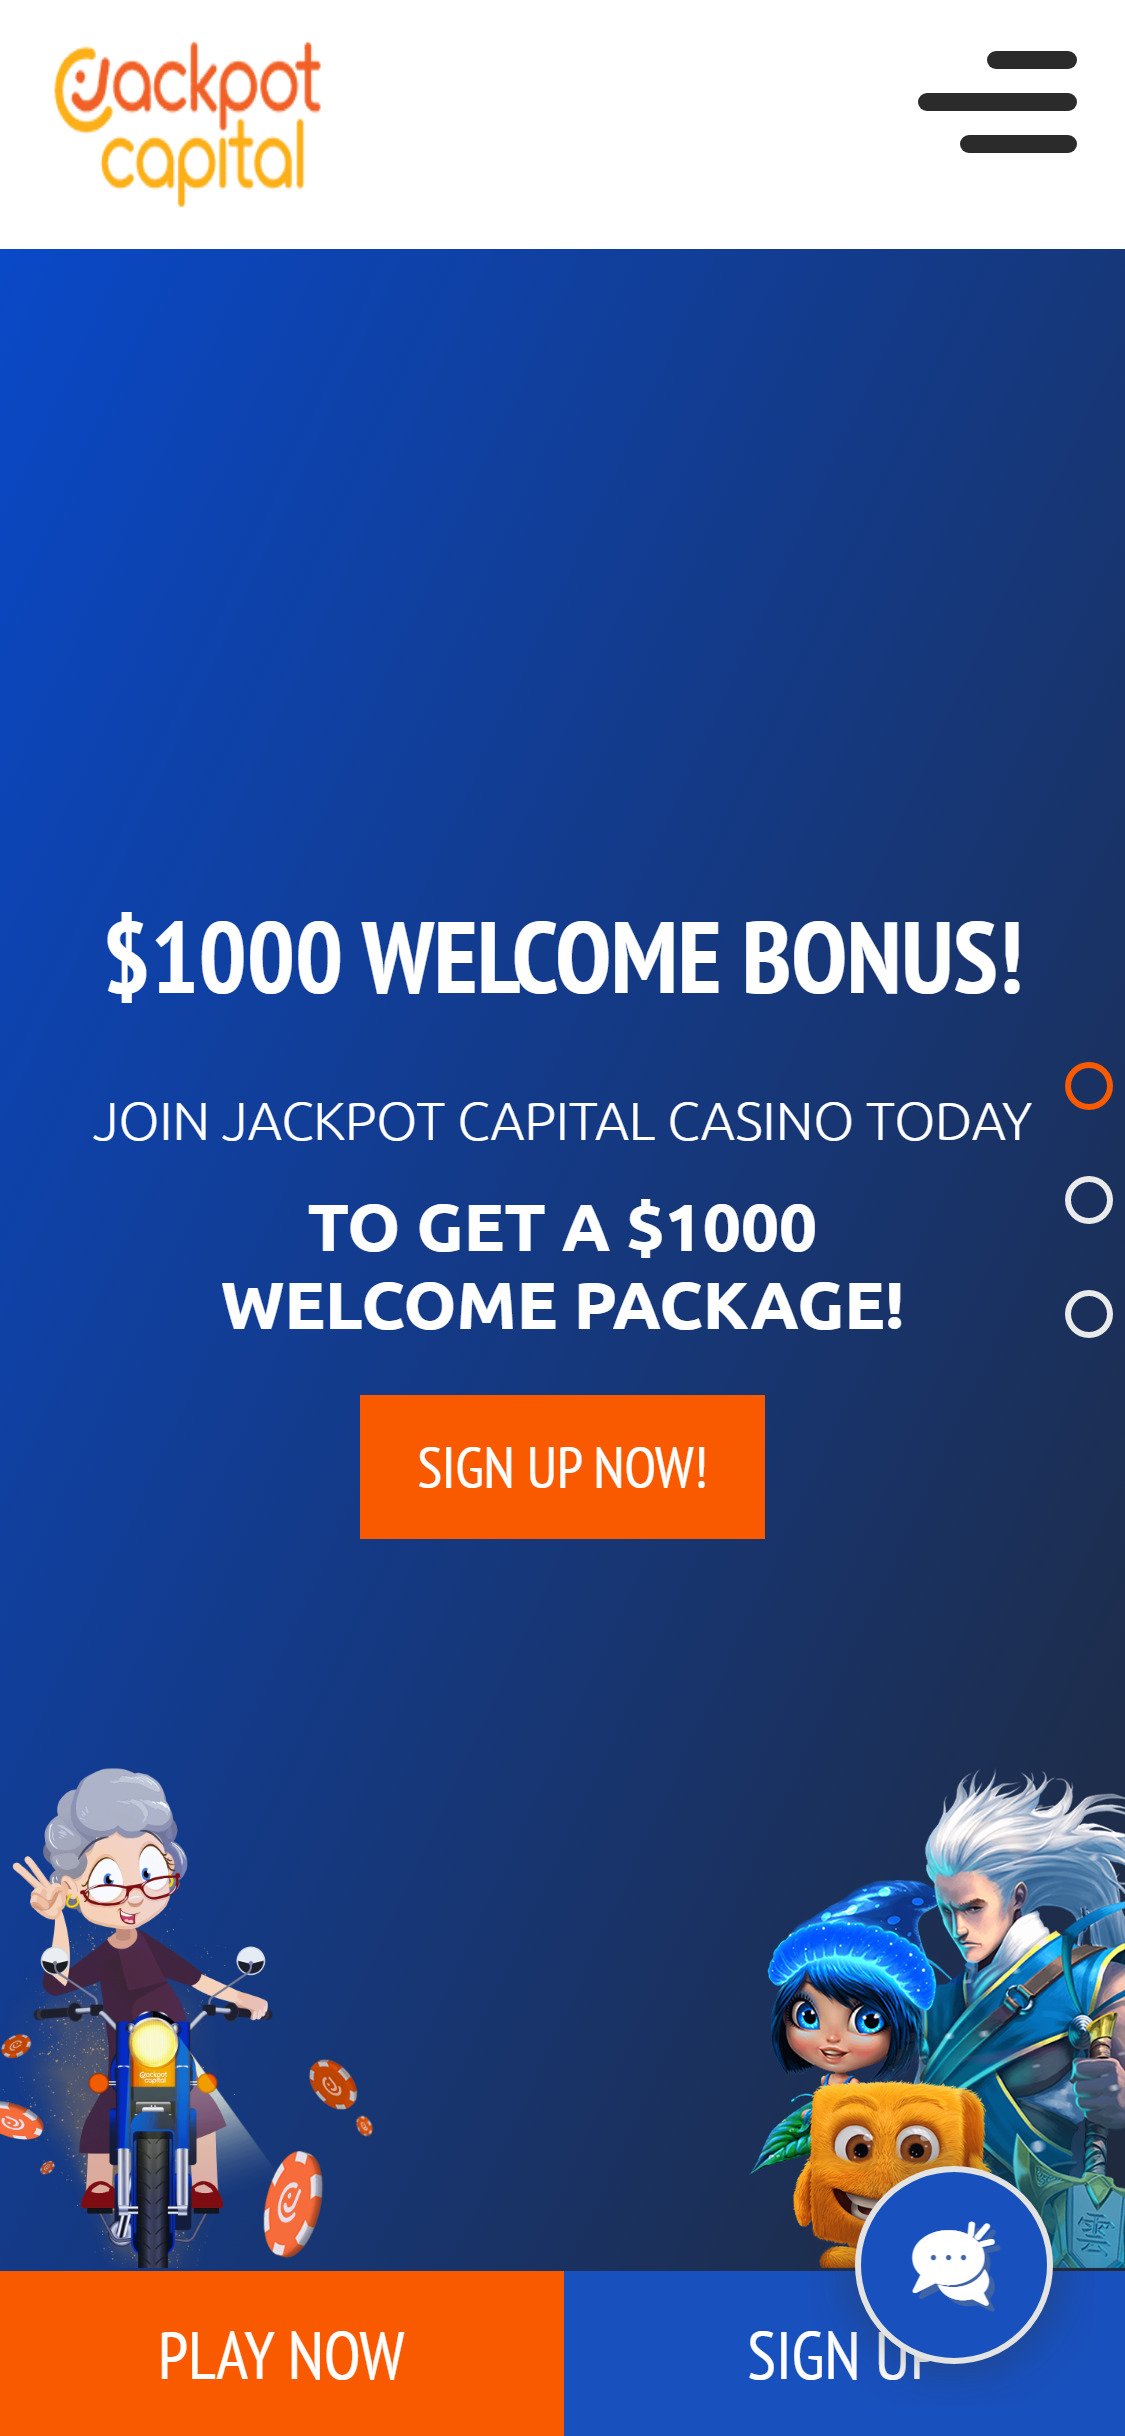 Jackpot Capital Casino Mobile Review